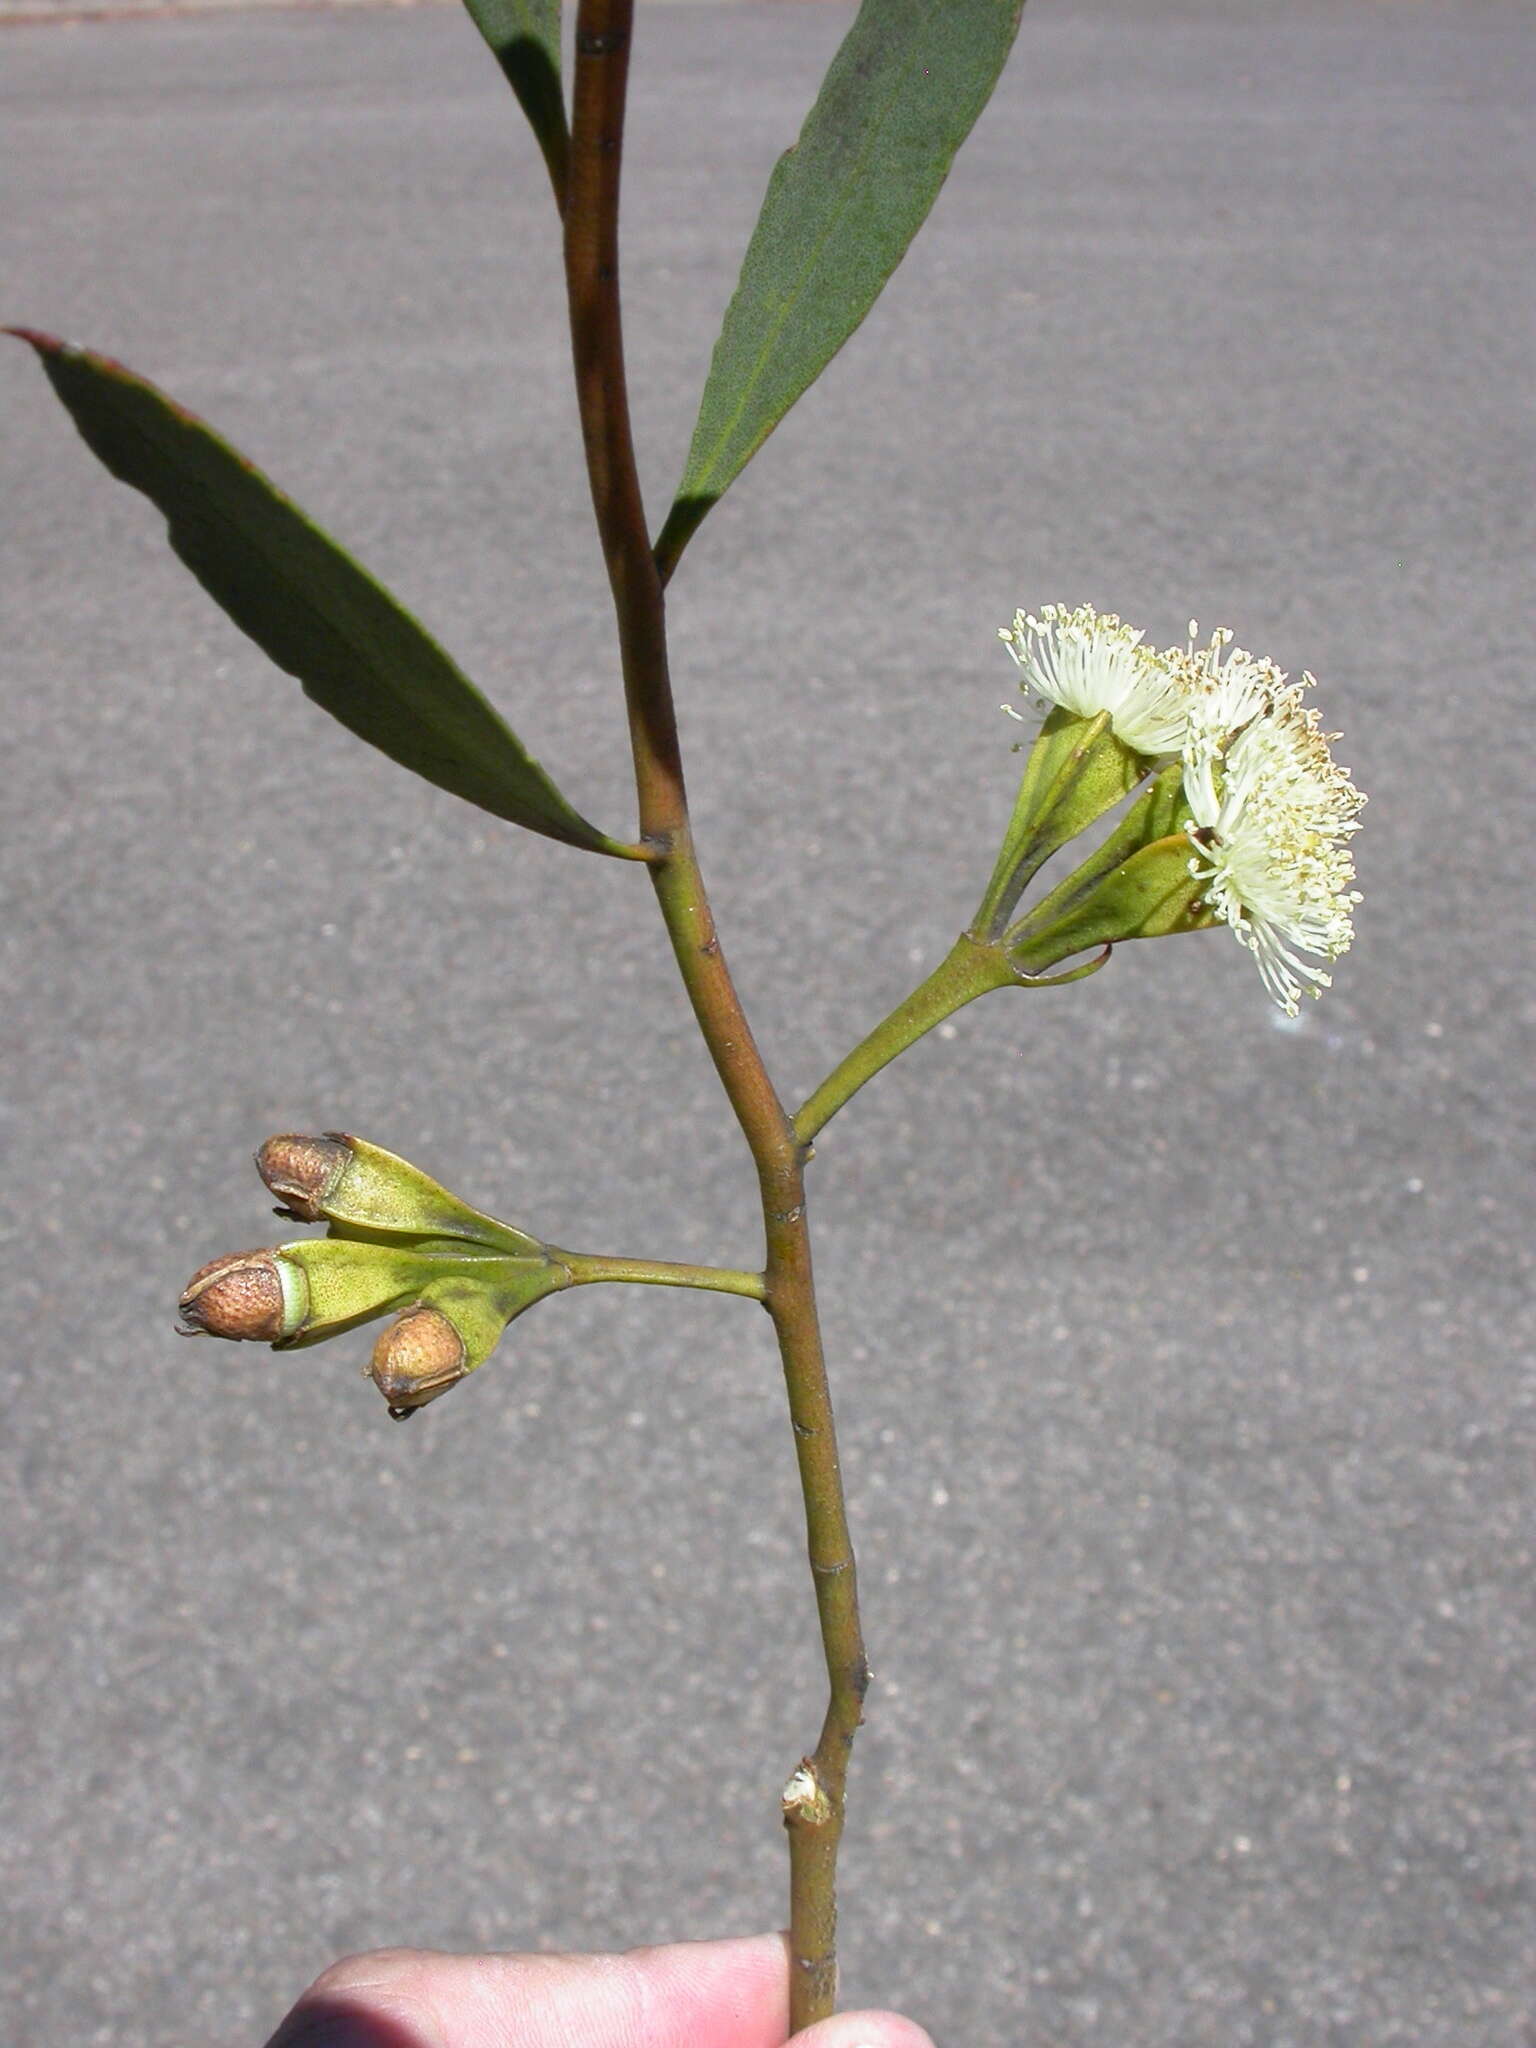 Image of Eucalyptus steedmanii C. A. Gardner